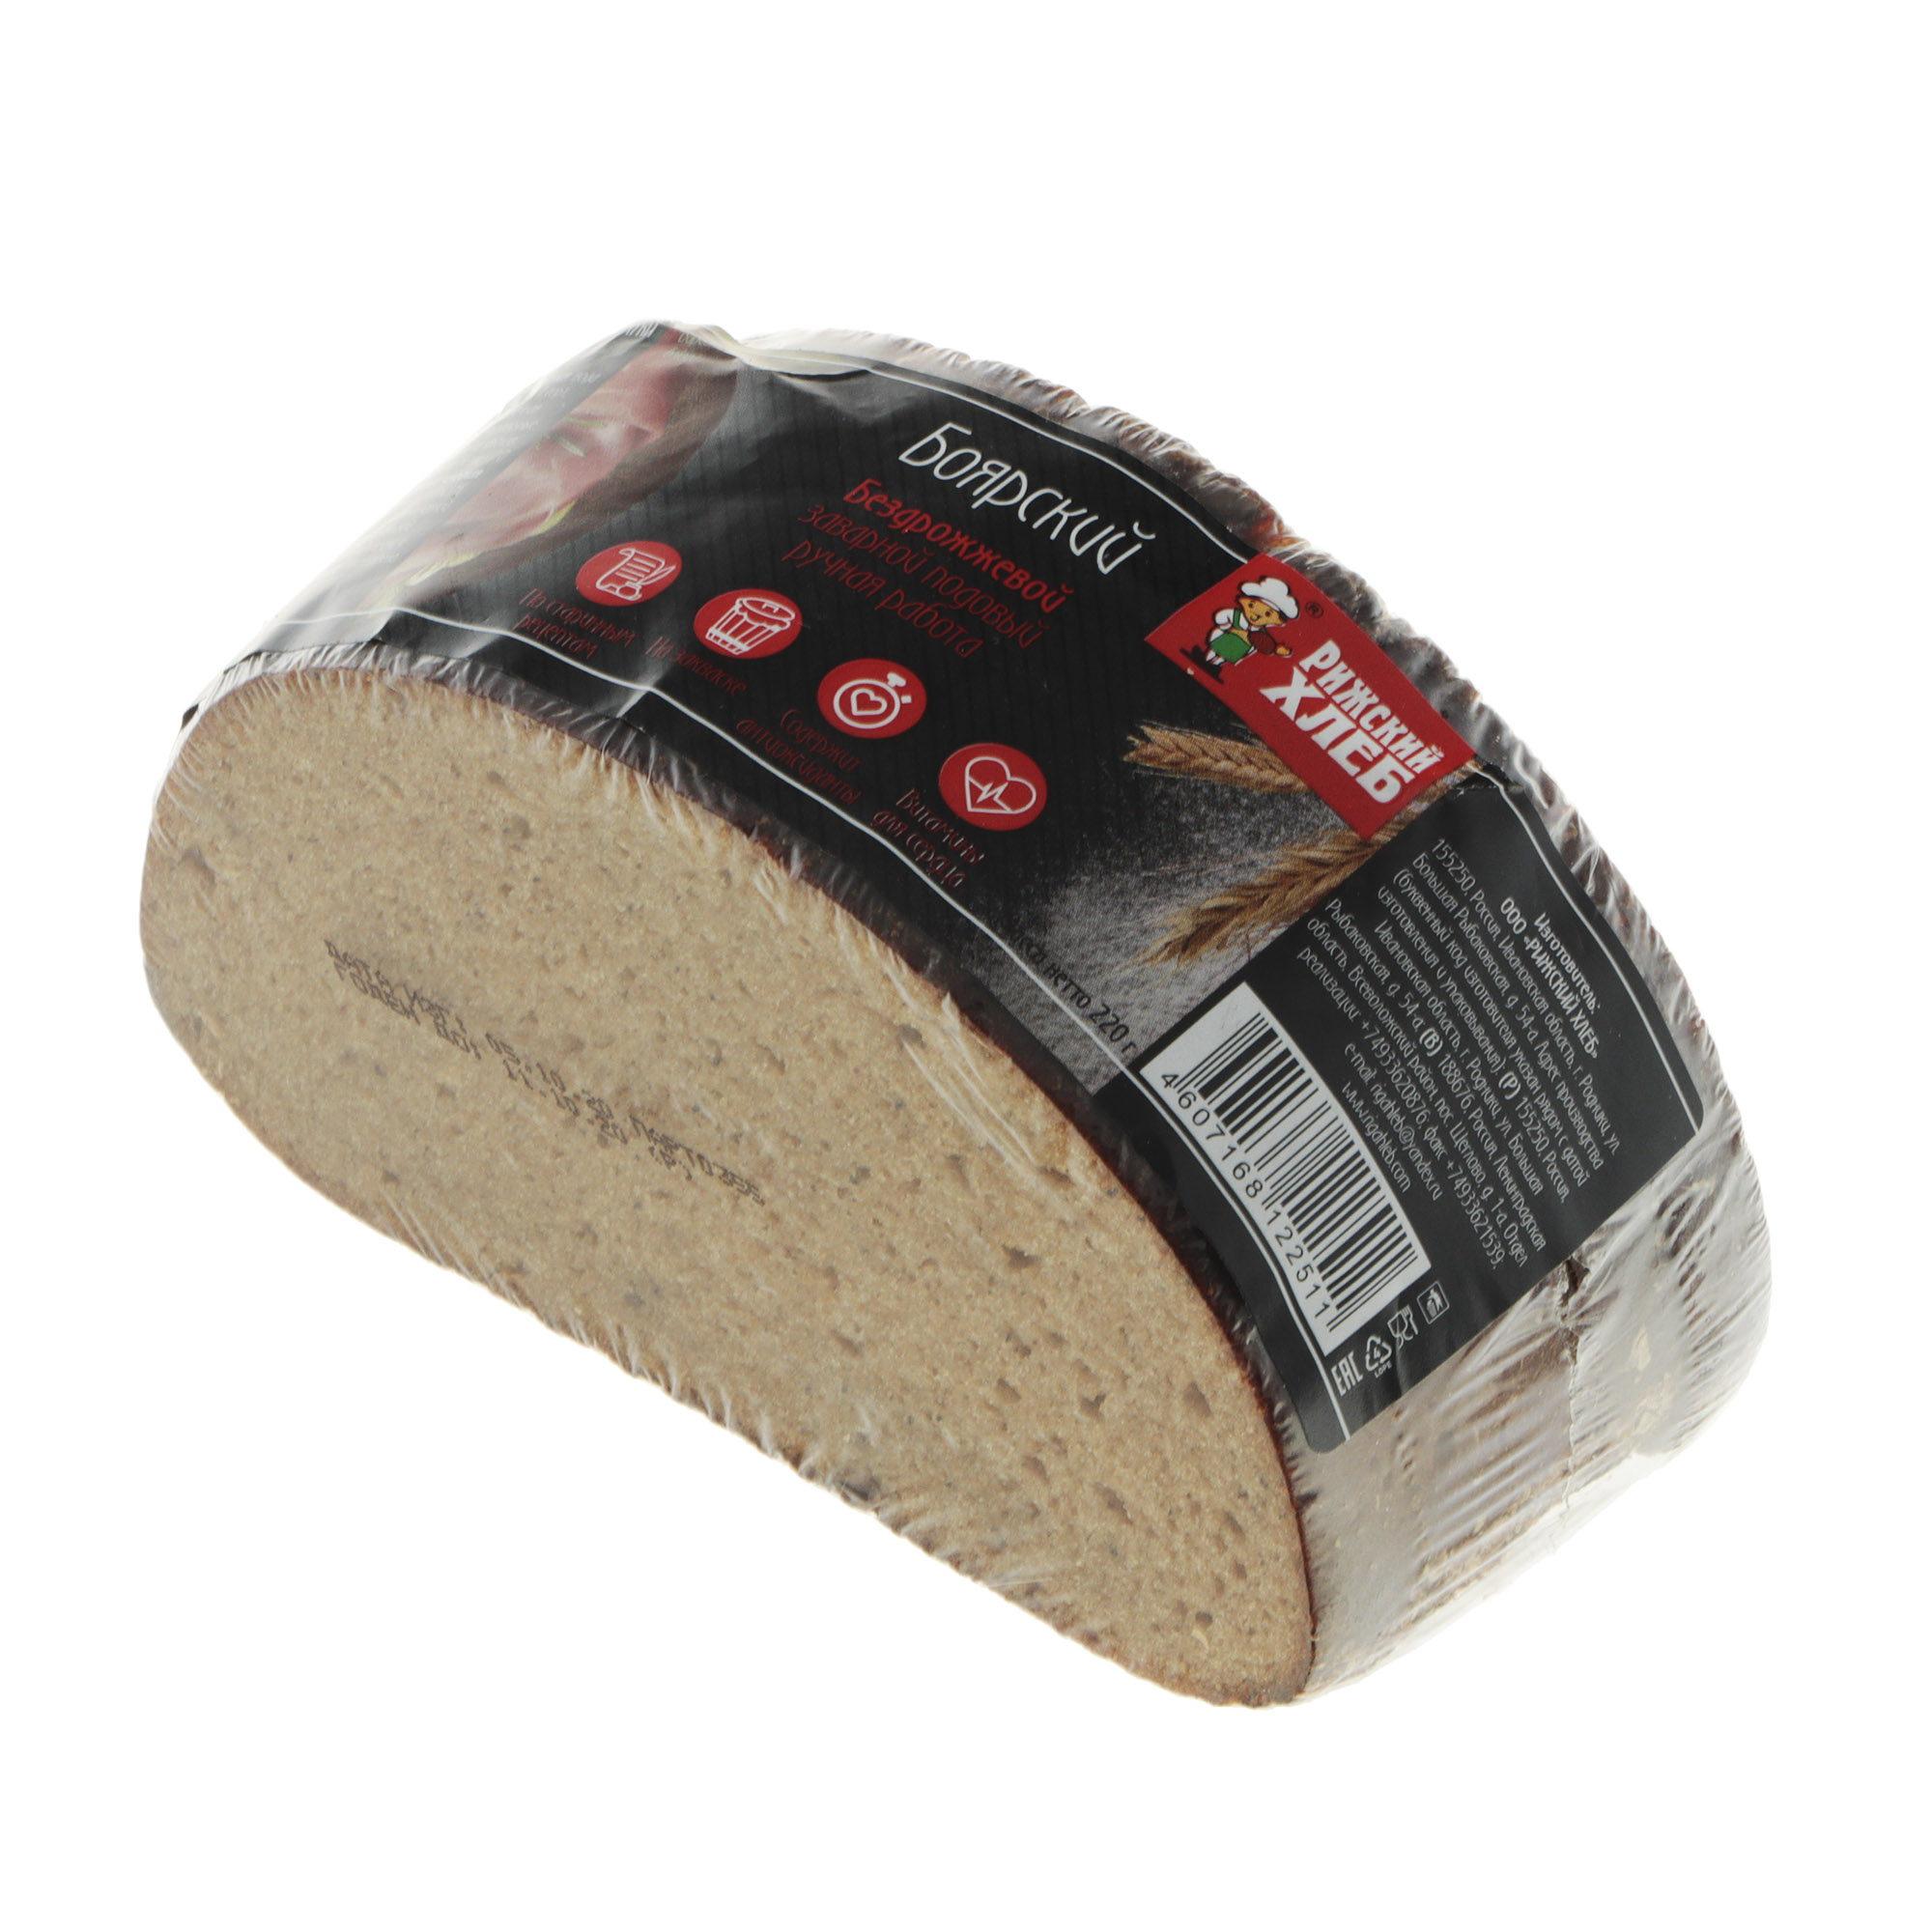 Хлеб Рижский хлеб боярский 220 г хлеб рижский хлеб домашний 400 г